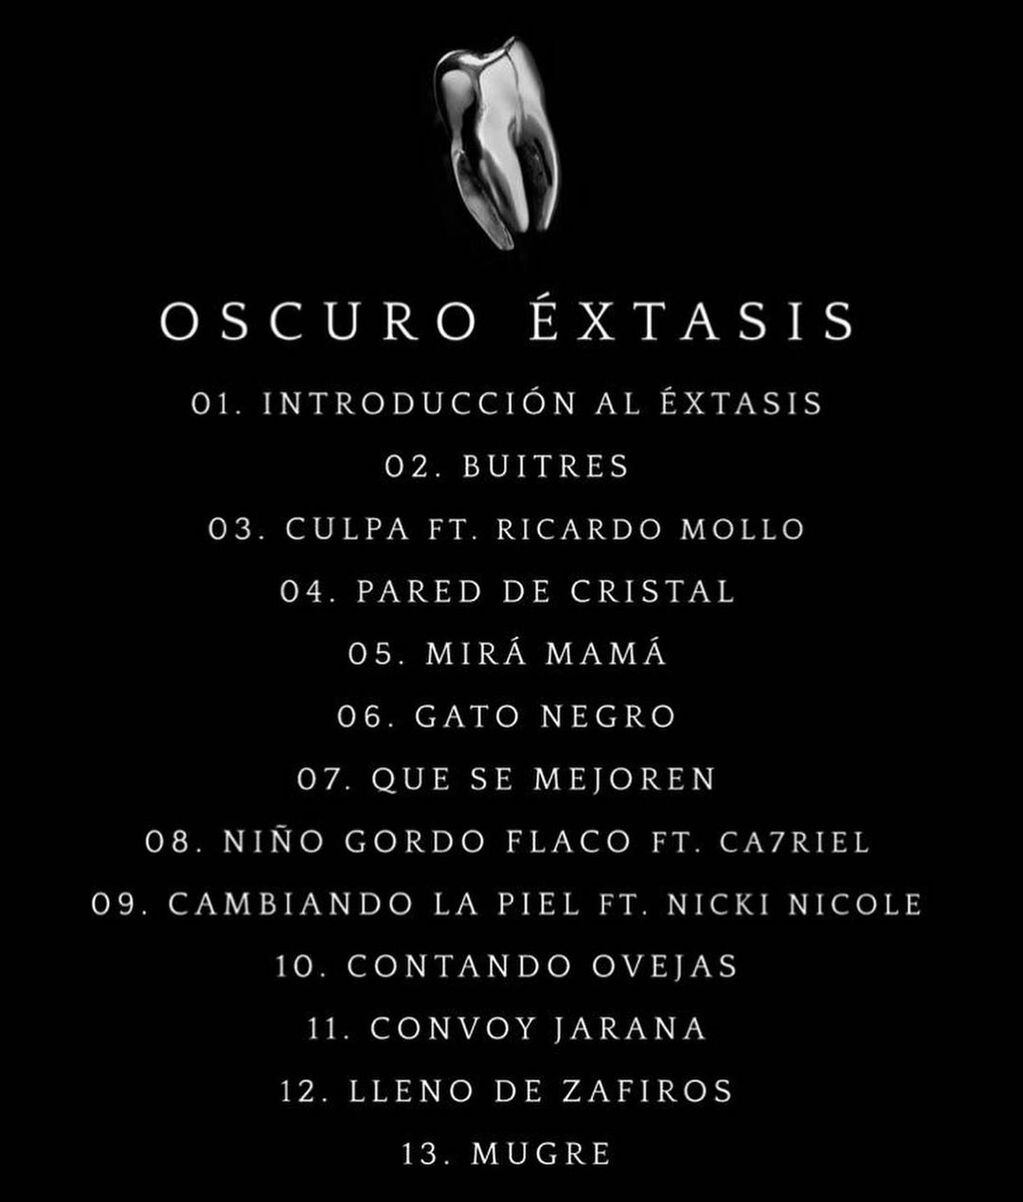 Tracklist de "Oscuro éxtasis".